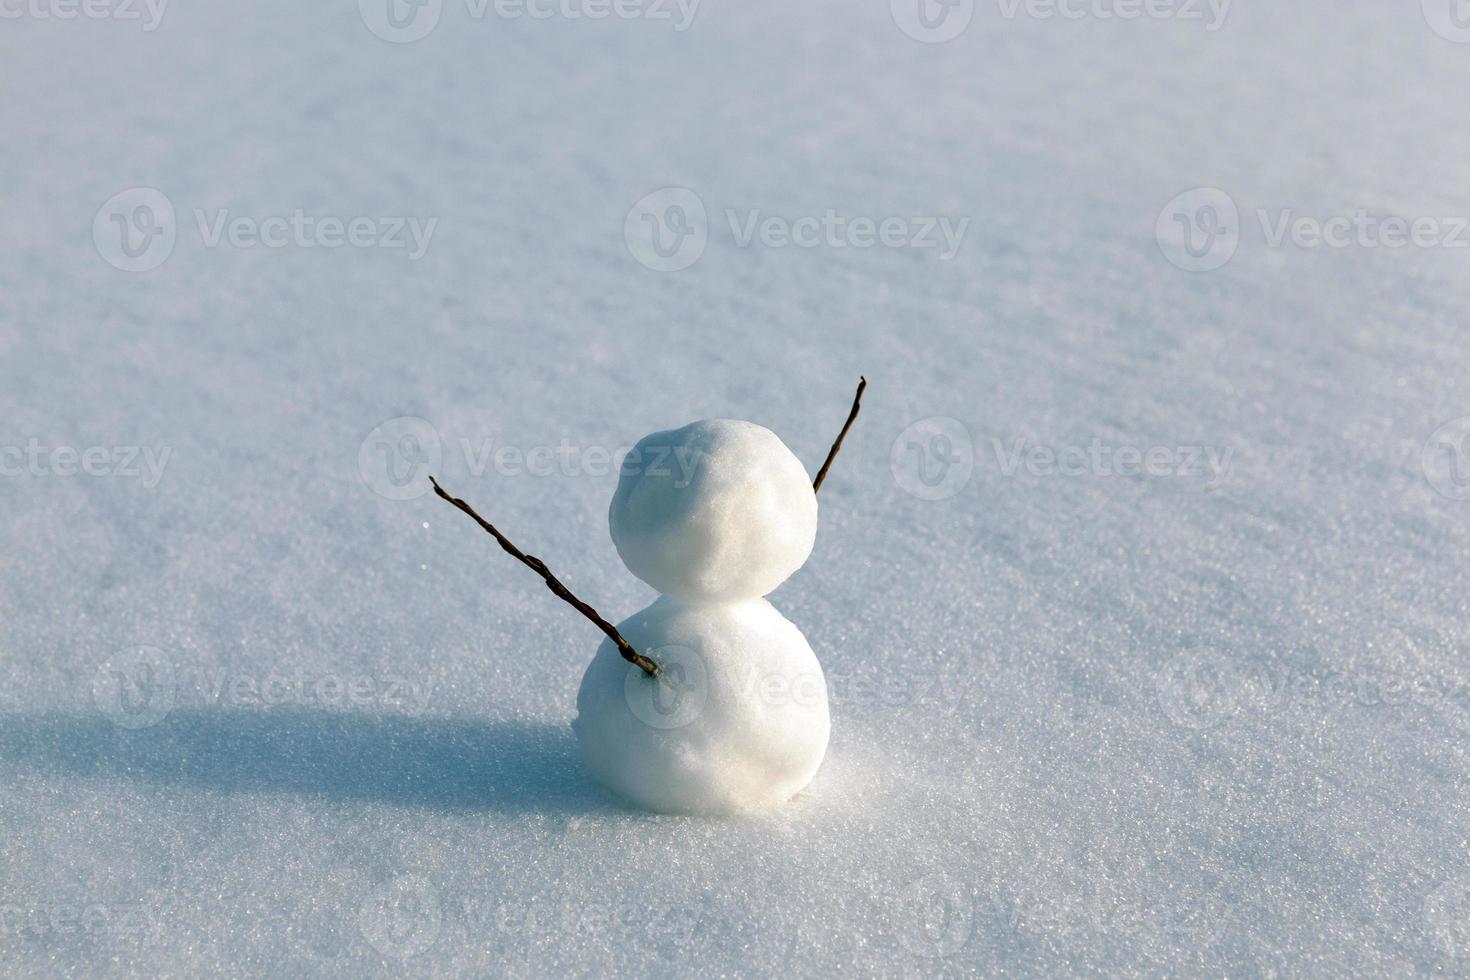 snowmen made of snow in winter photo